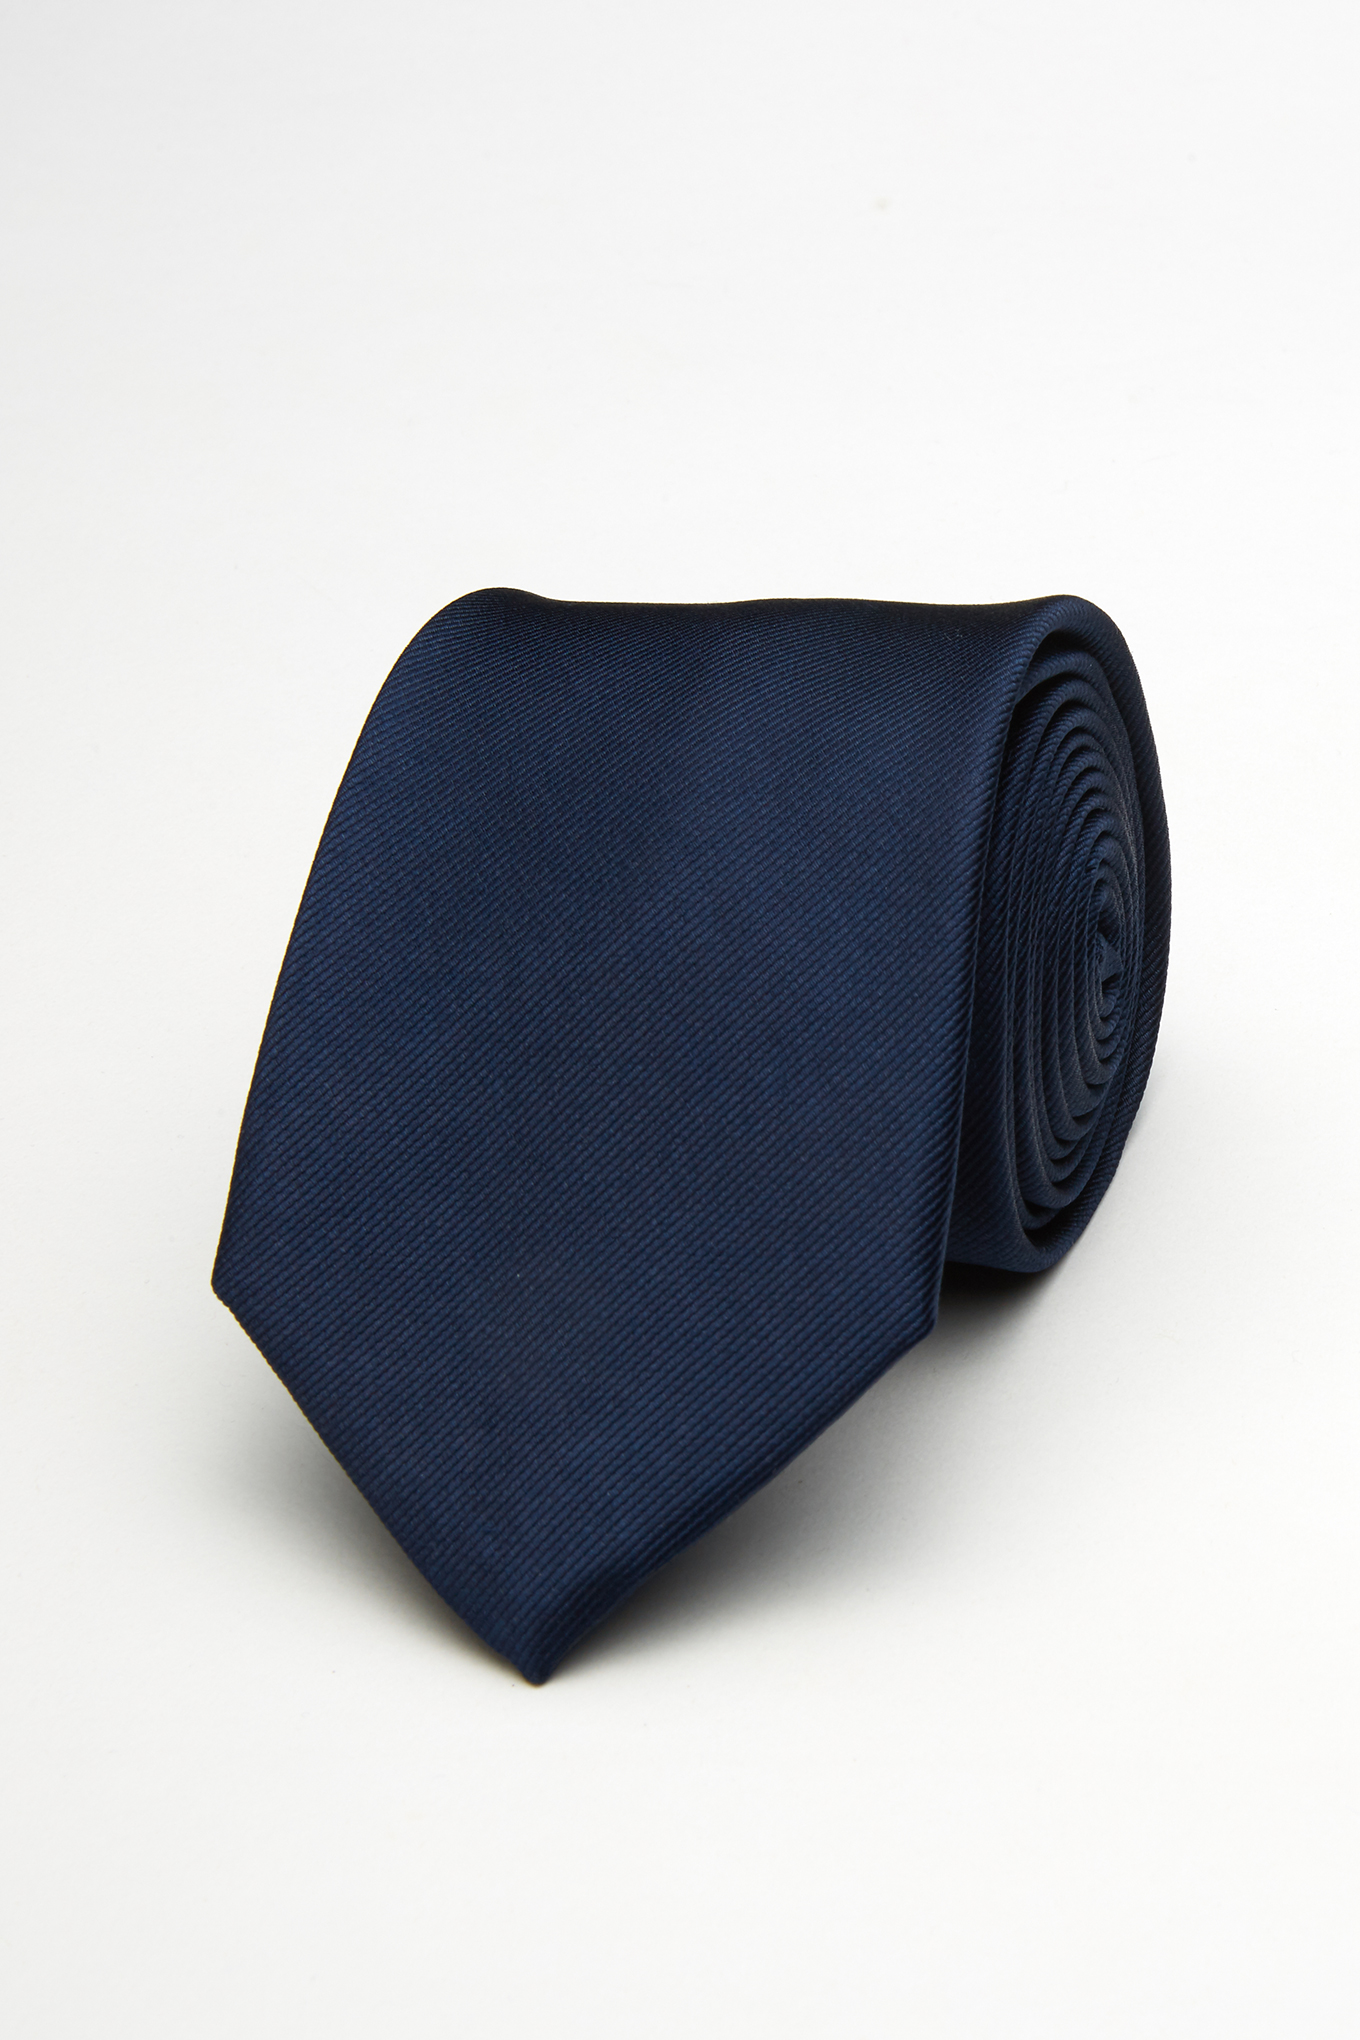 Gravata Azul Escuro Classic Homem